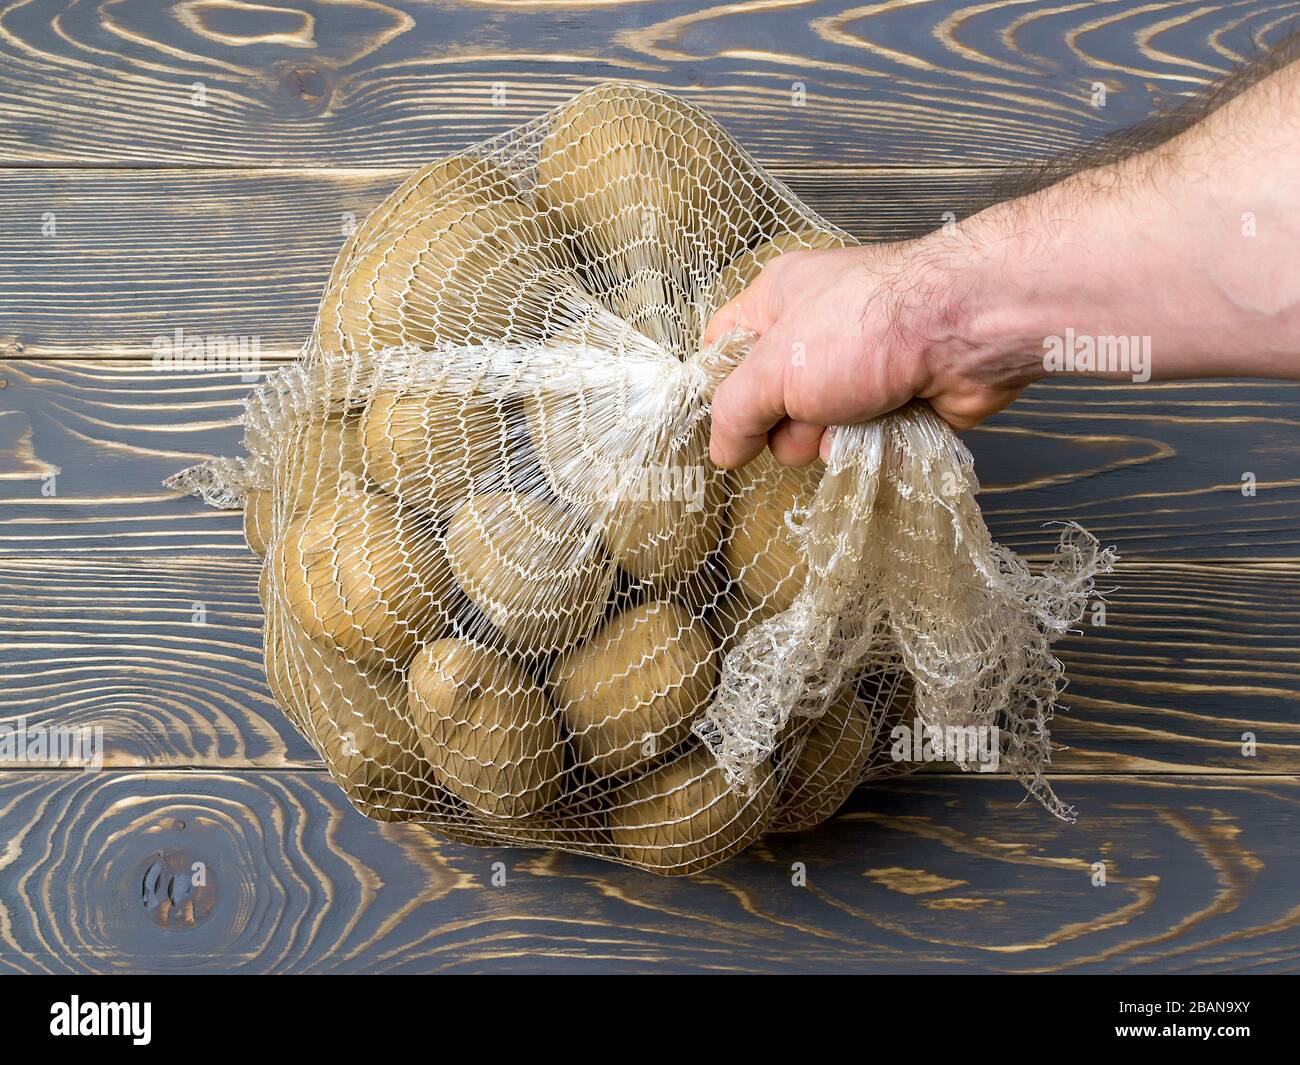 https://c8.alamy.com/comp/2BAN9XY/man-hand-lifts-the-pp-mesh-bag-with-10-kg-of-farm-potatoes-polypropylene-net-sack-with-22-lb-of-organic-potatoes-on-a-dark-wooden-floor-2BAN9XY.jpg